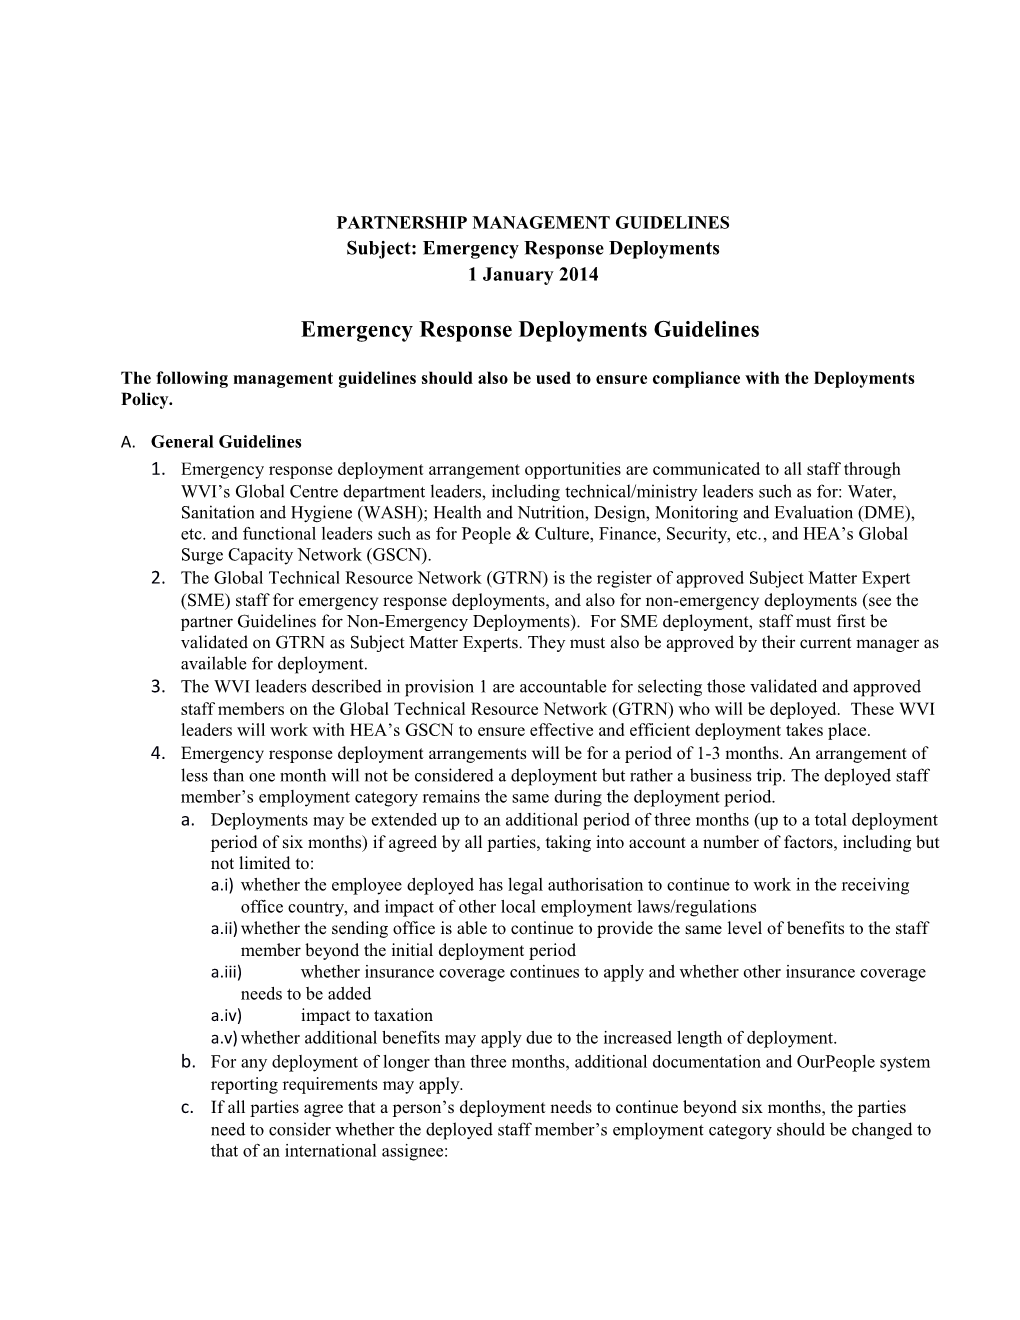 Subject: Emergency Response Deployments